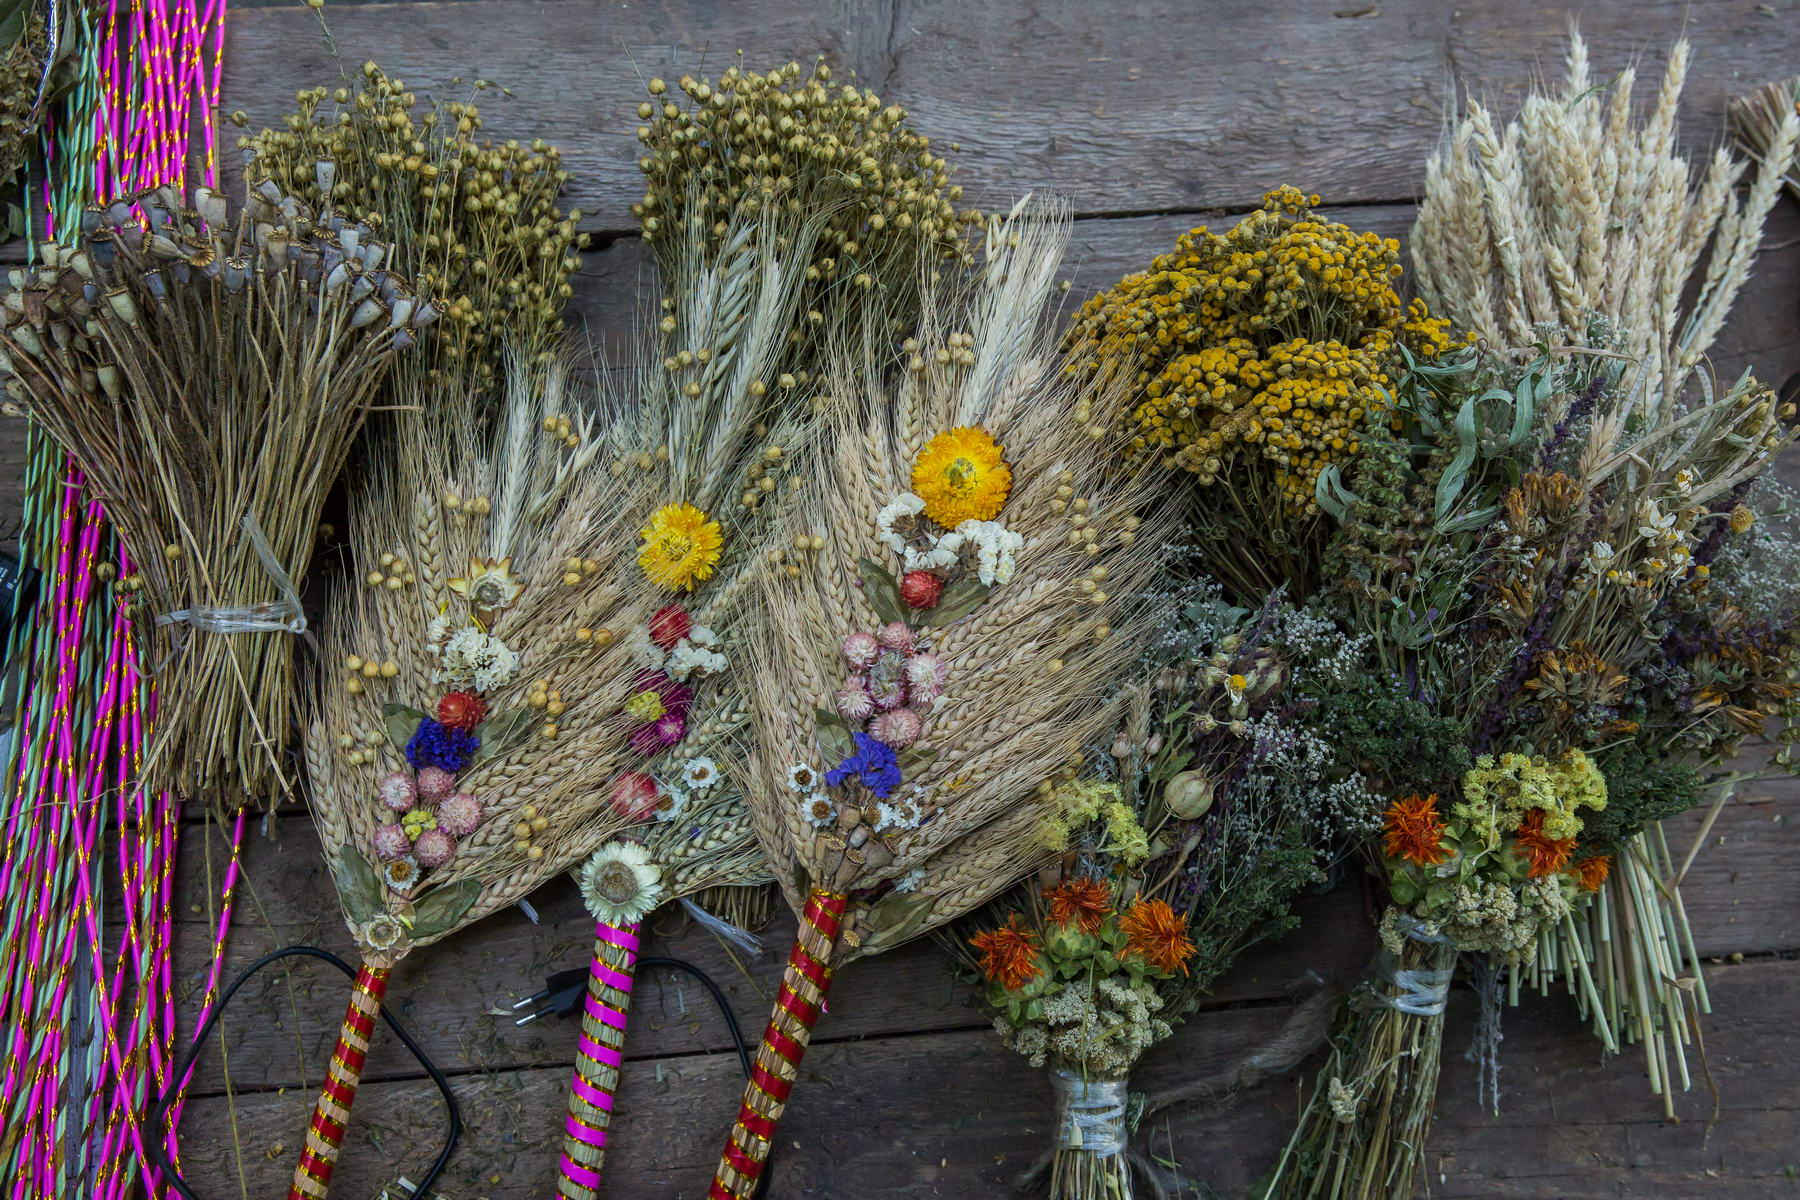 The village creating Ukraine’s eco-friendly iconic brooms ~~